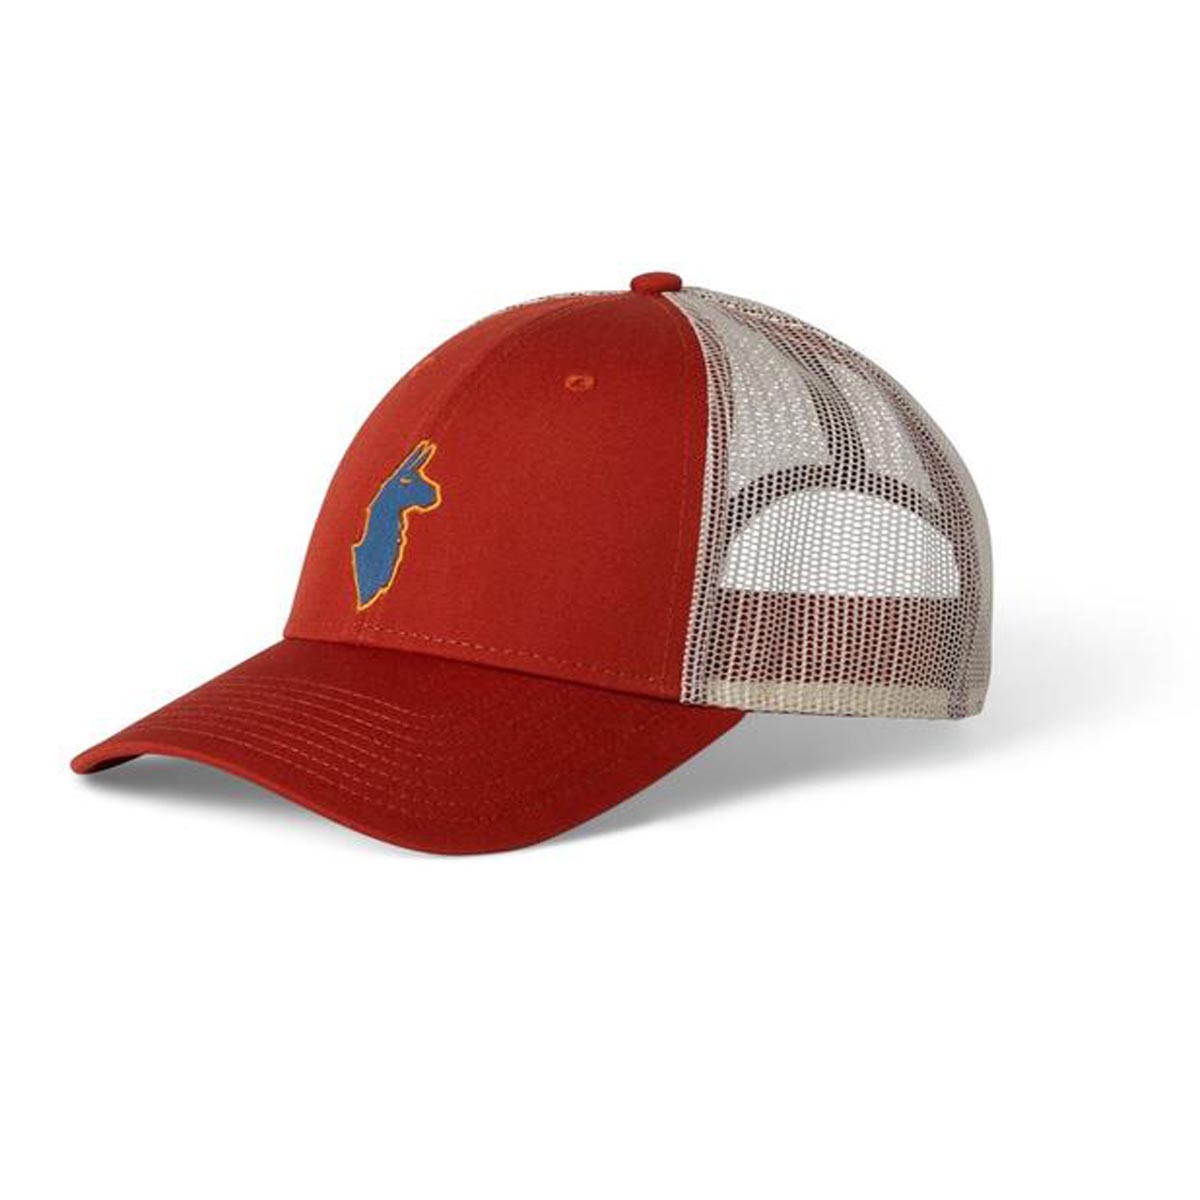 Cotopaxi The Llama Trucker Hat